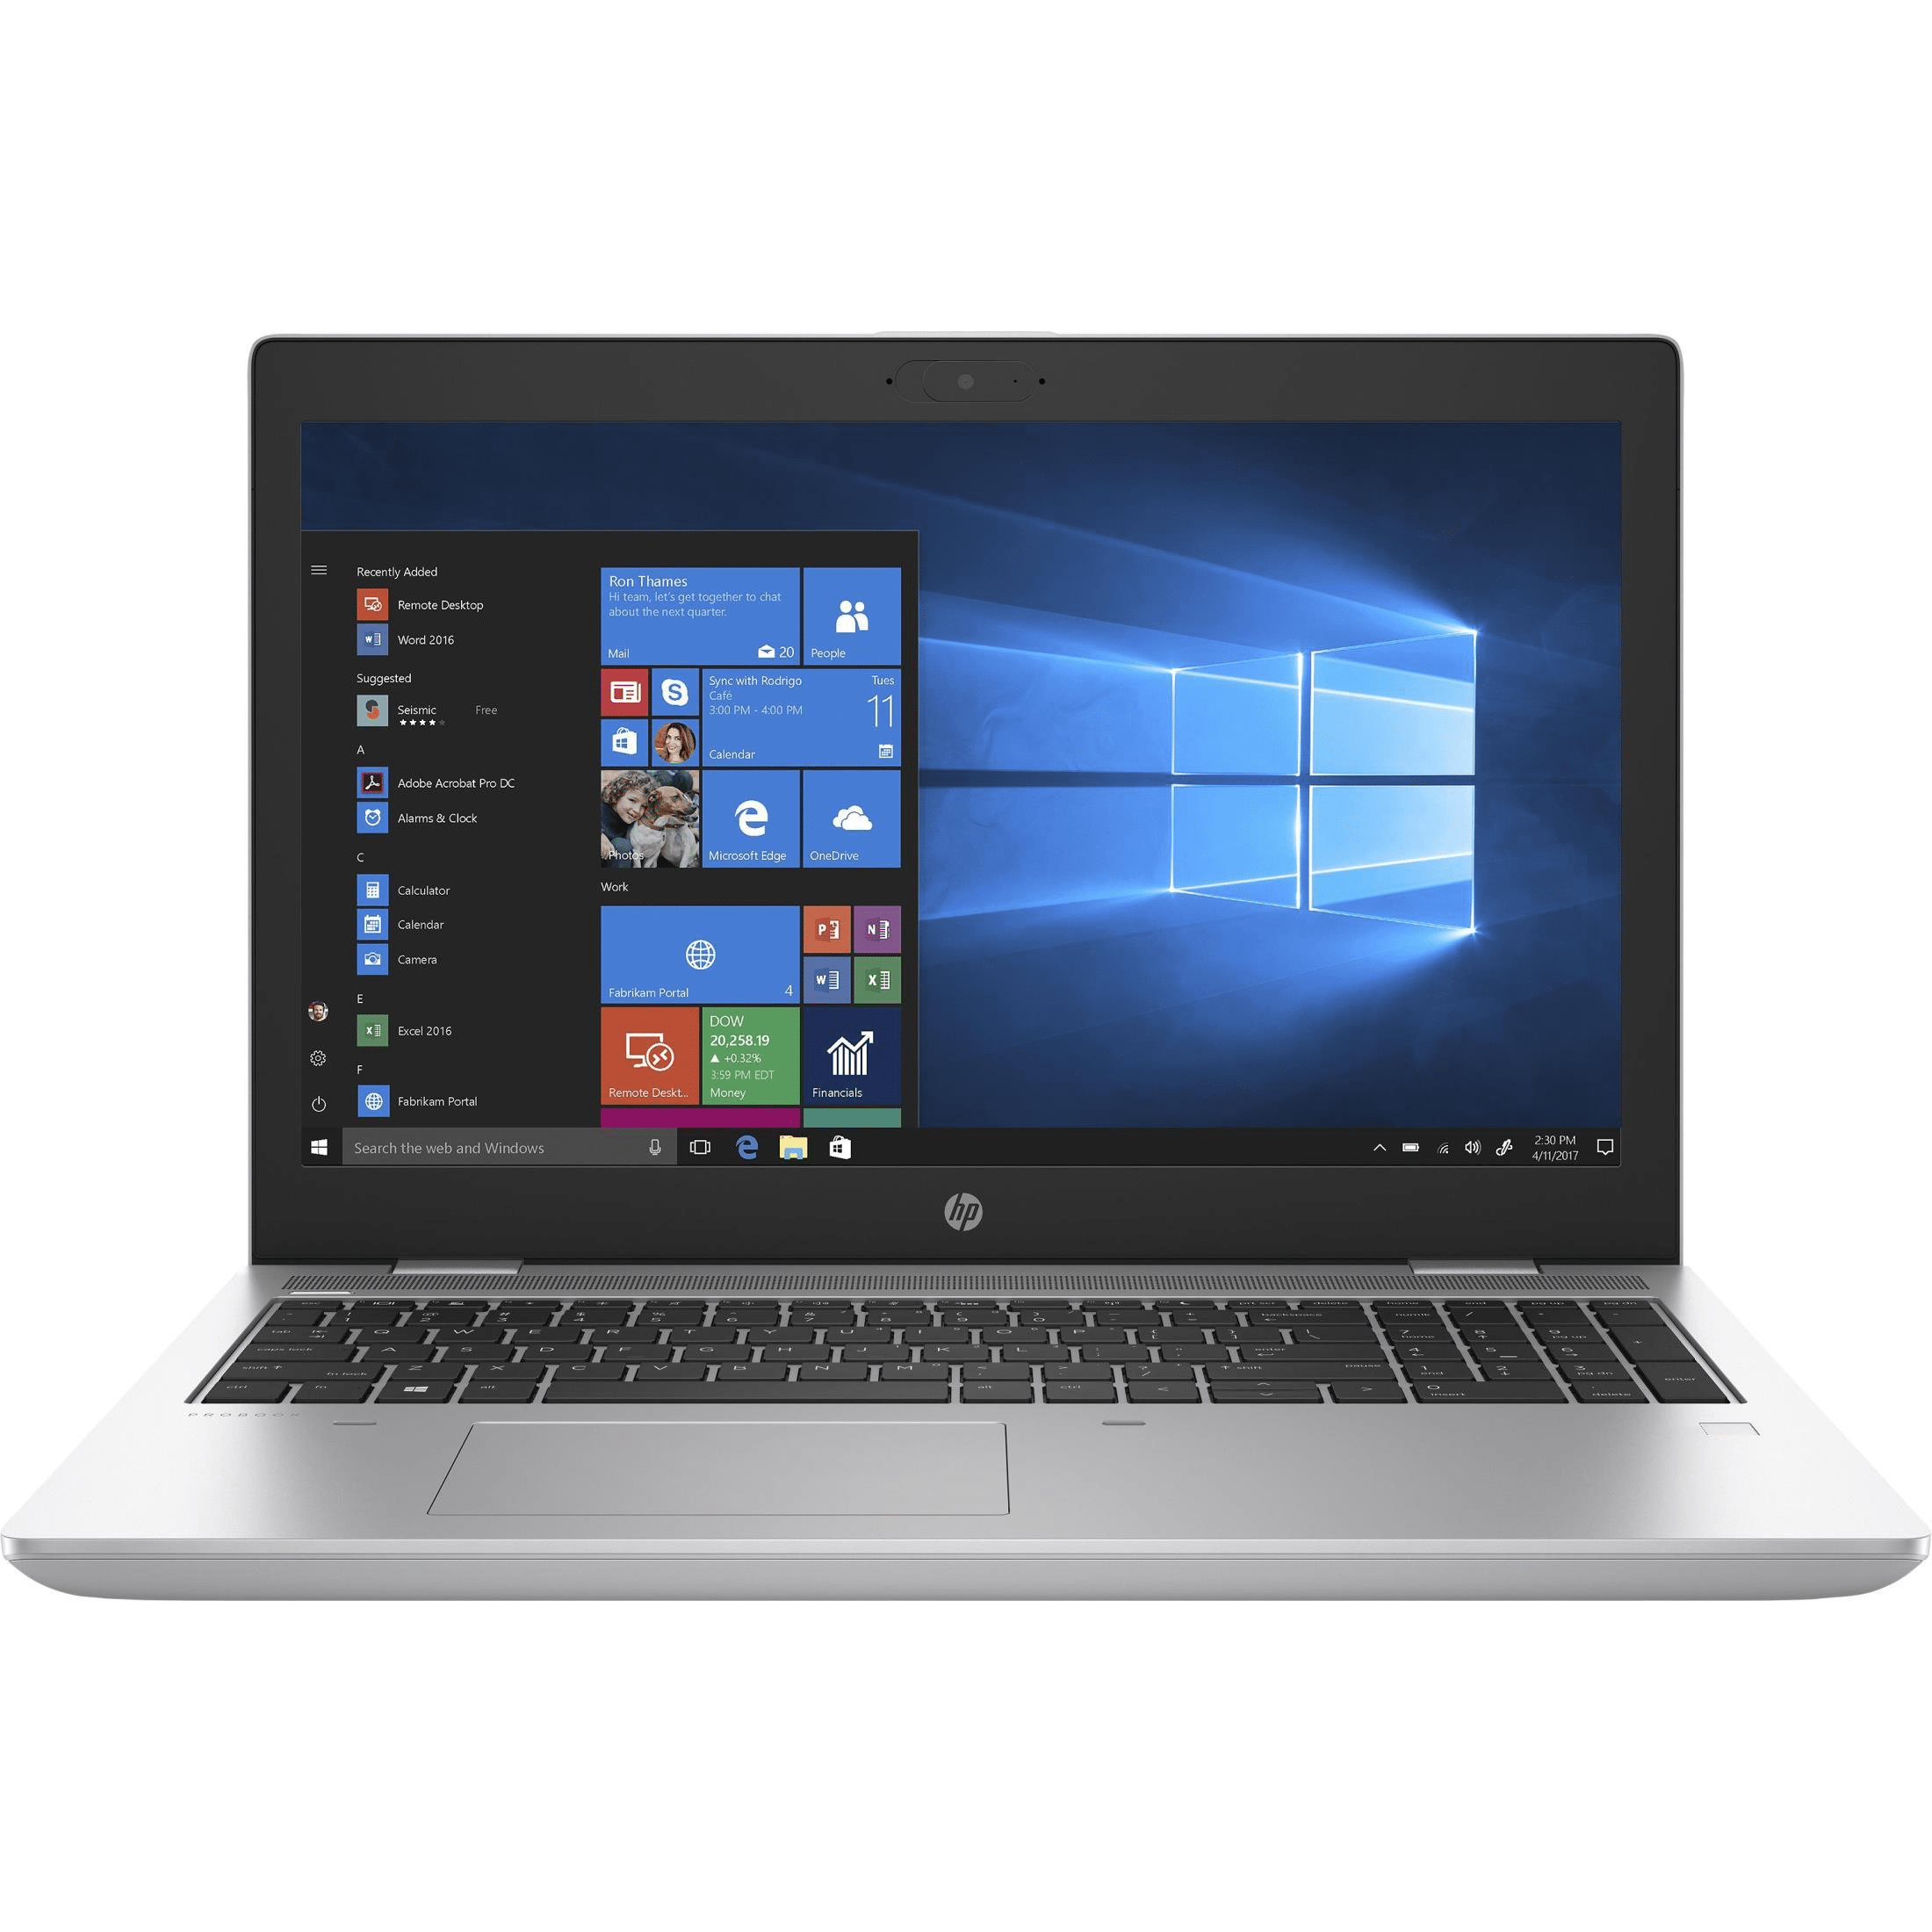 HP ProBook 650 G5 15.6-inch Laptop - Intel Core i5-8265U 256GB SSD 4GB